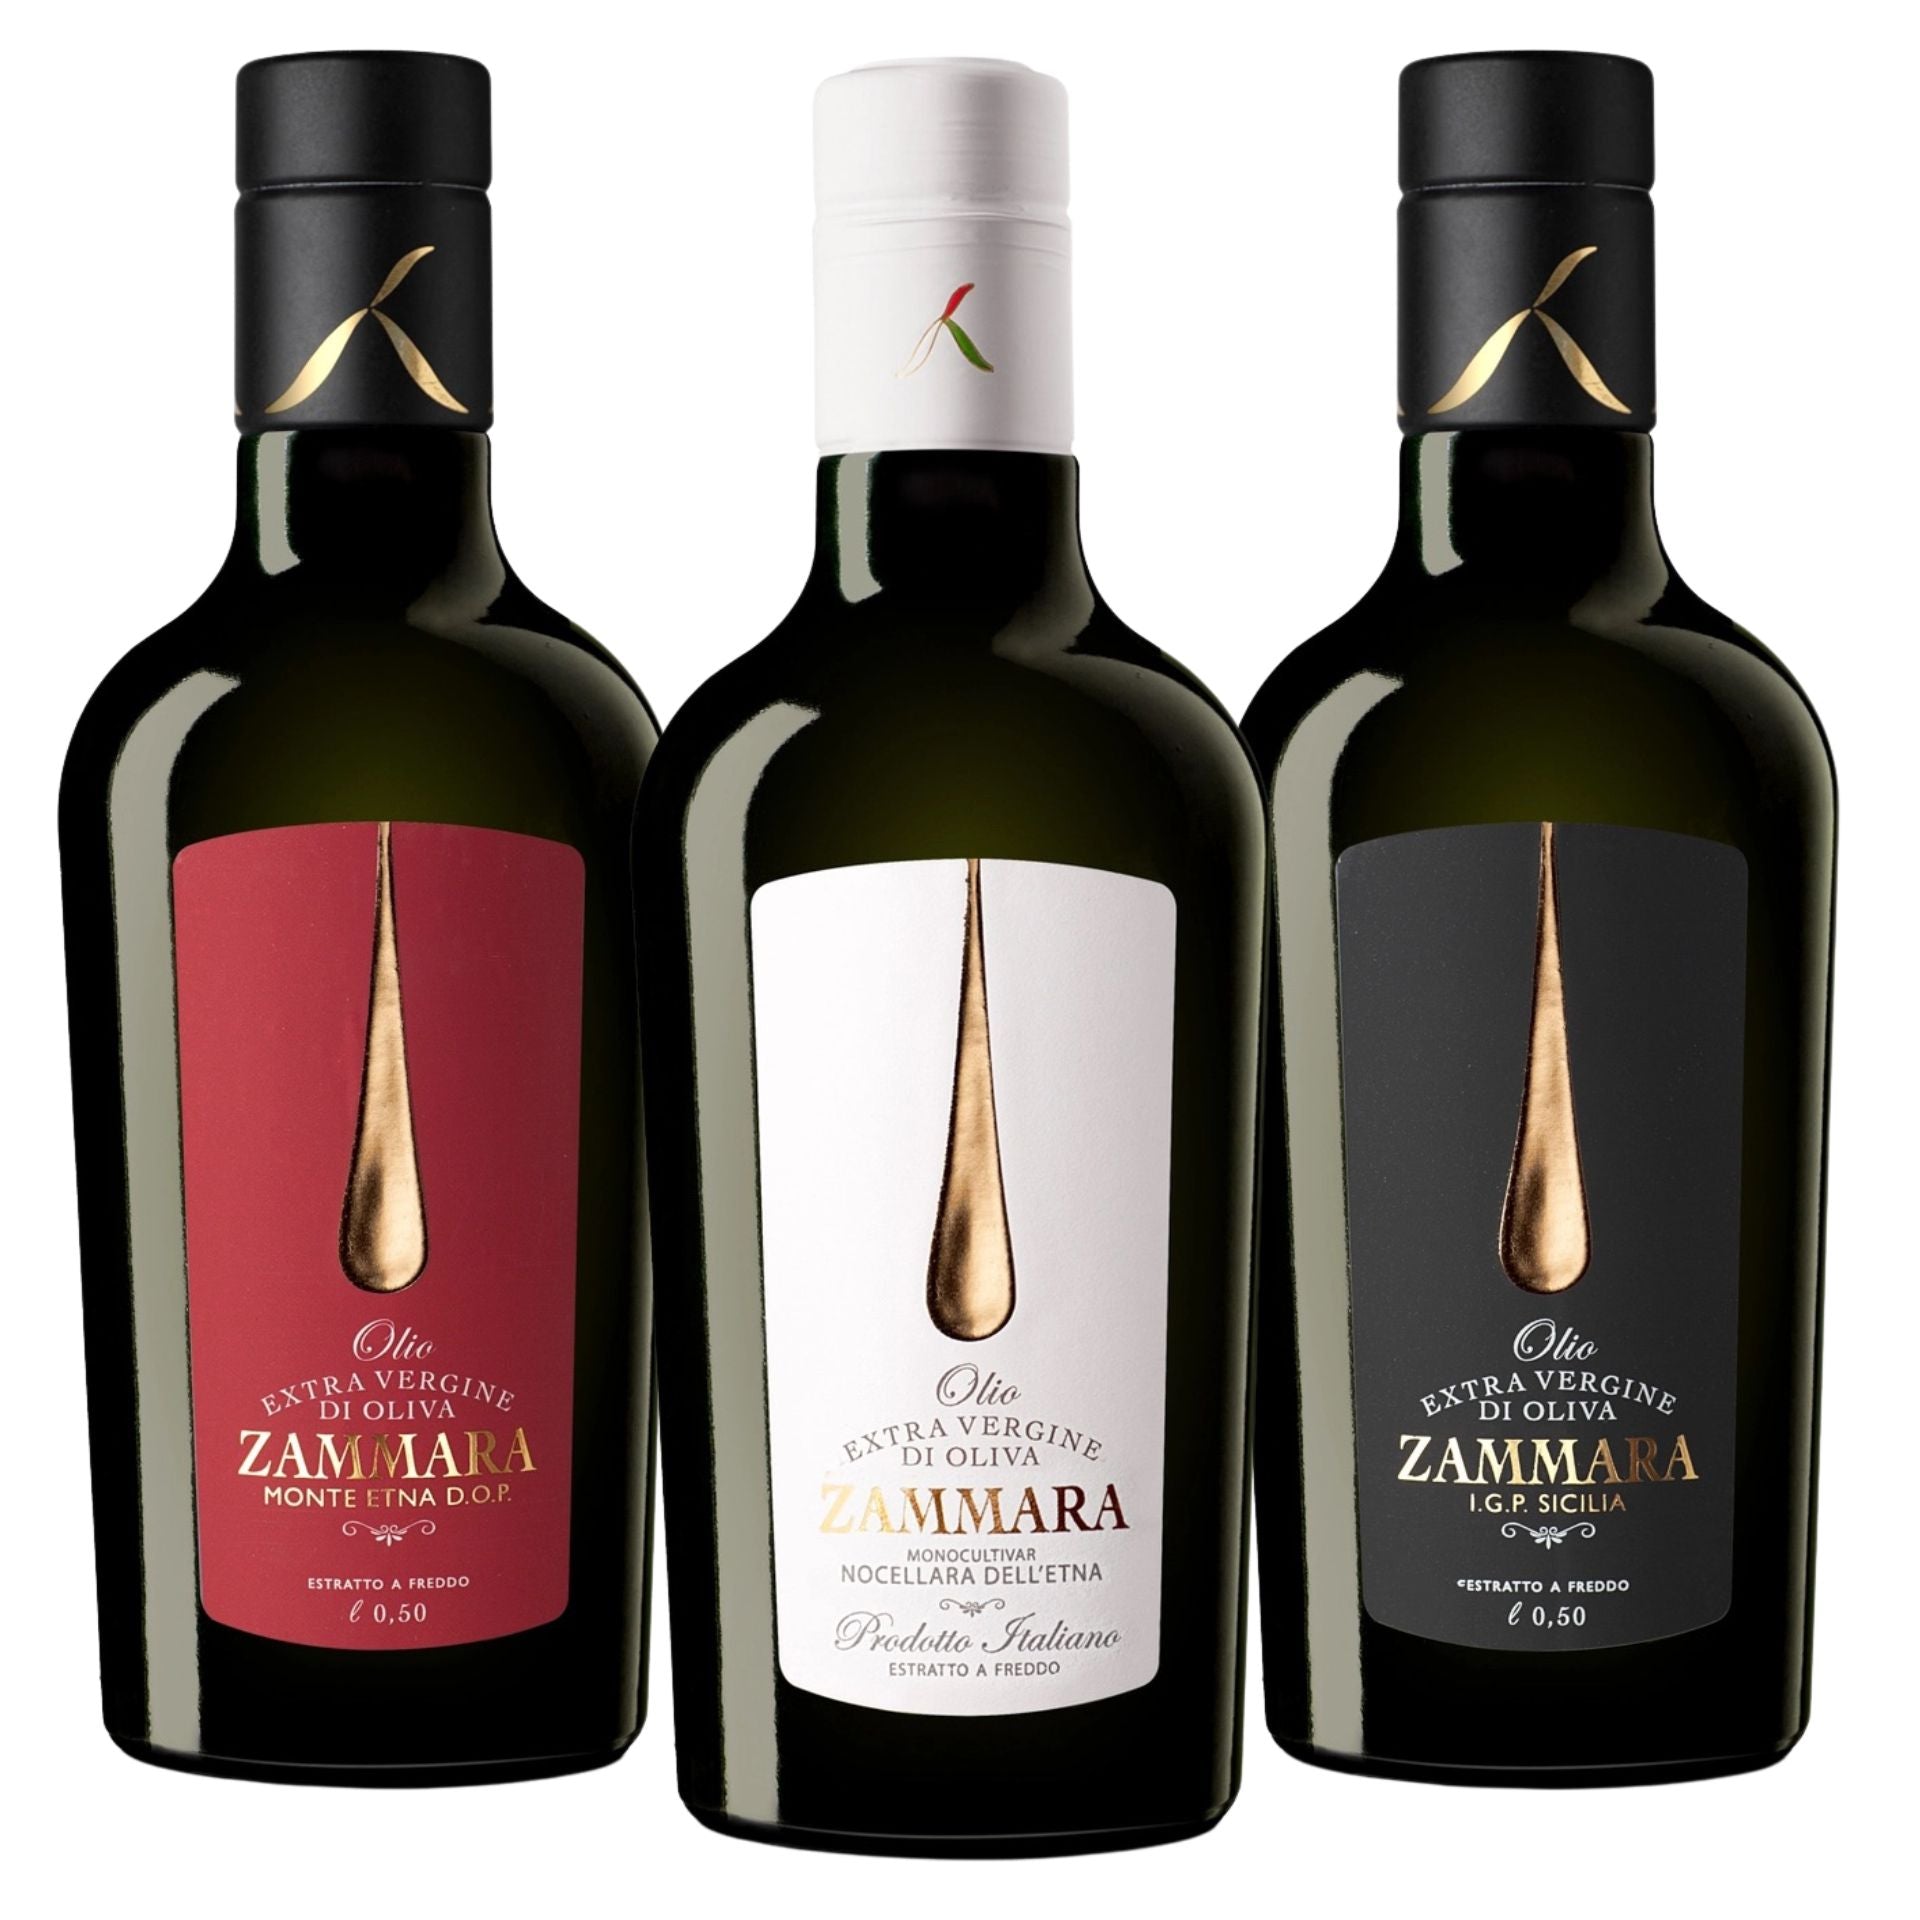 Oleificio Russo Zammara Collection. Organic IGP Sicily, Monte DOP & Nocellara Etnea Extra Virgin Olive Oil 500ml Feast Italy